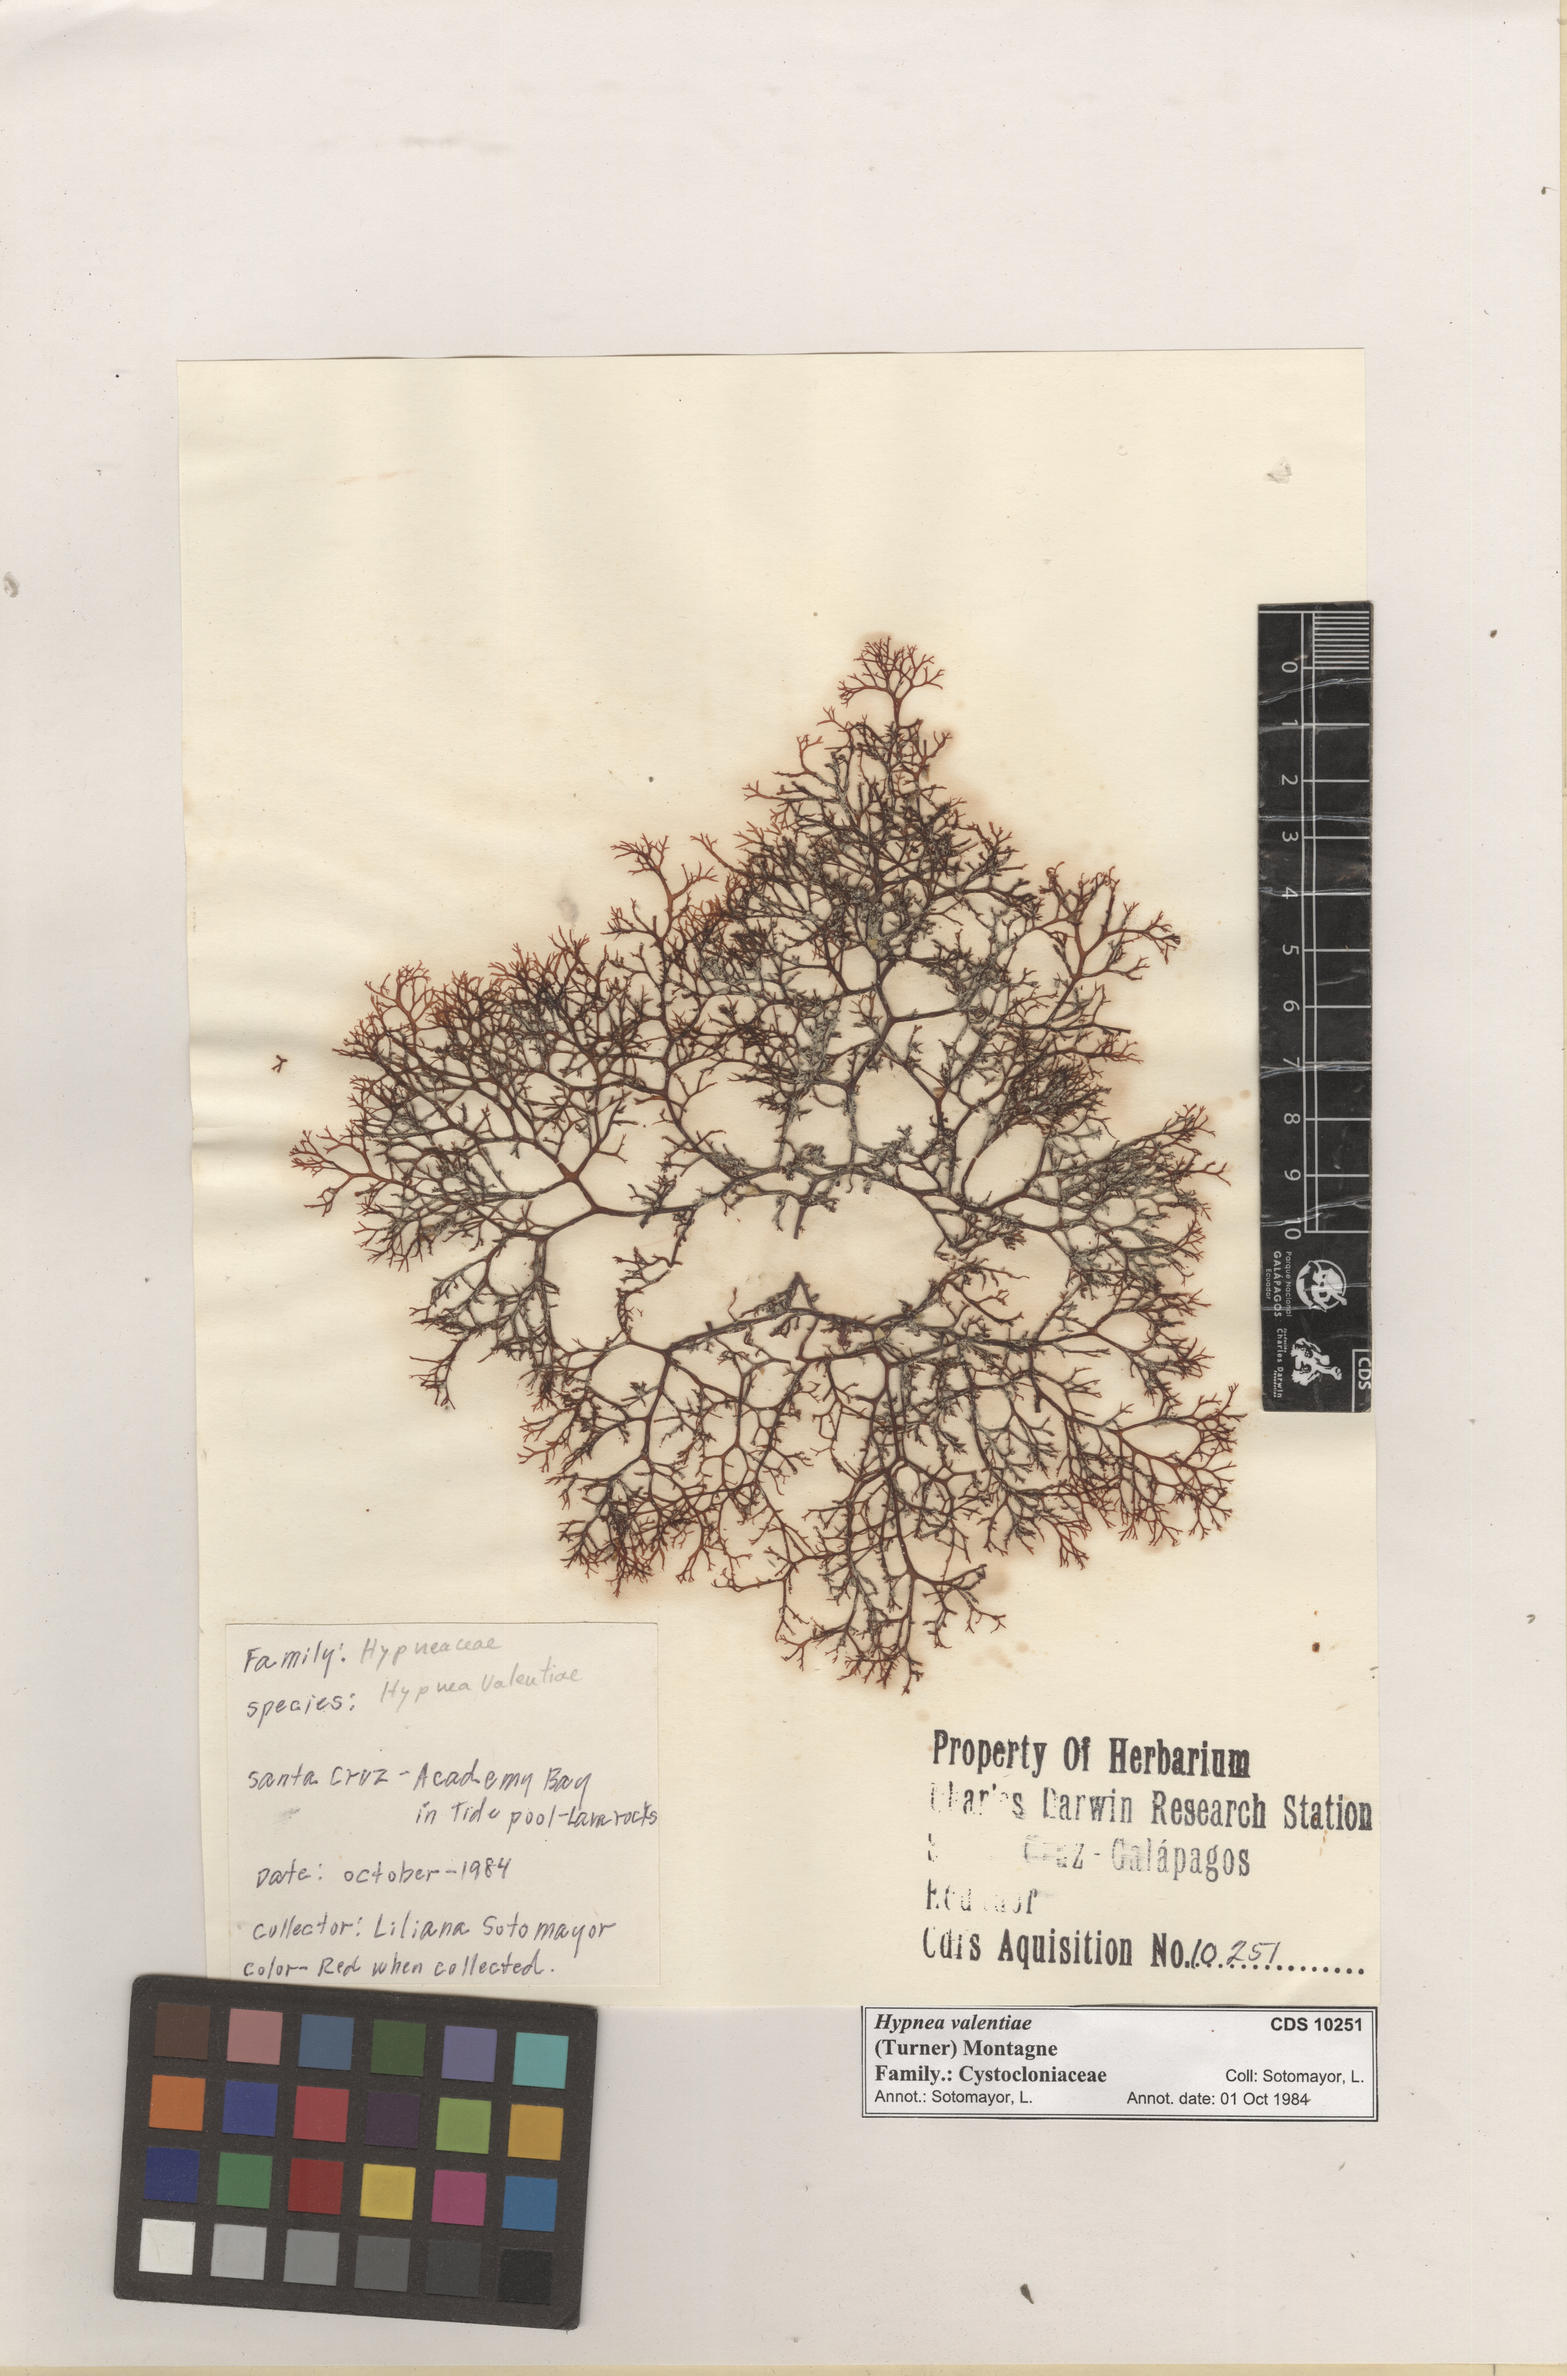  Hypnea valentiae , CDS specimen herbarium. Photo: Bravo, L..